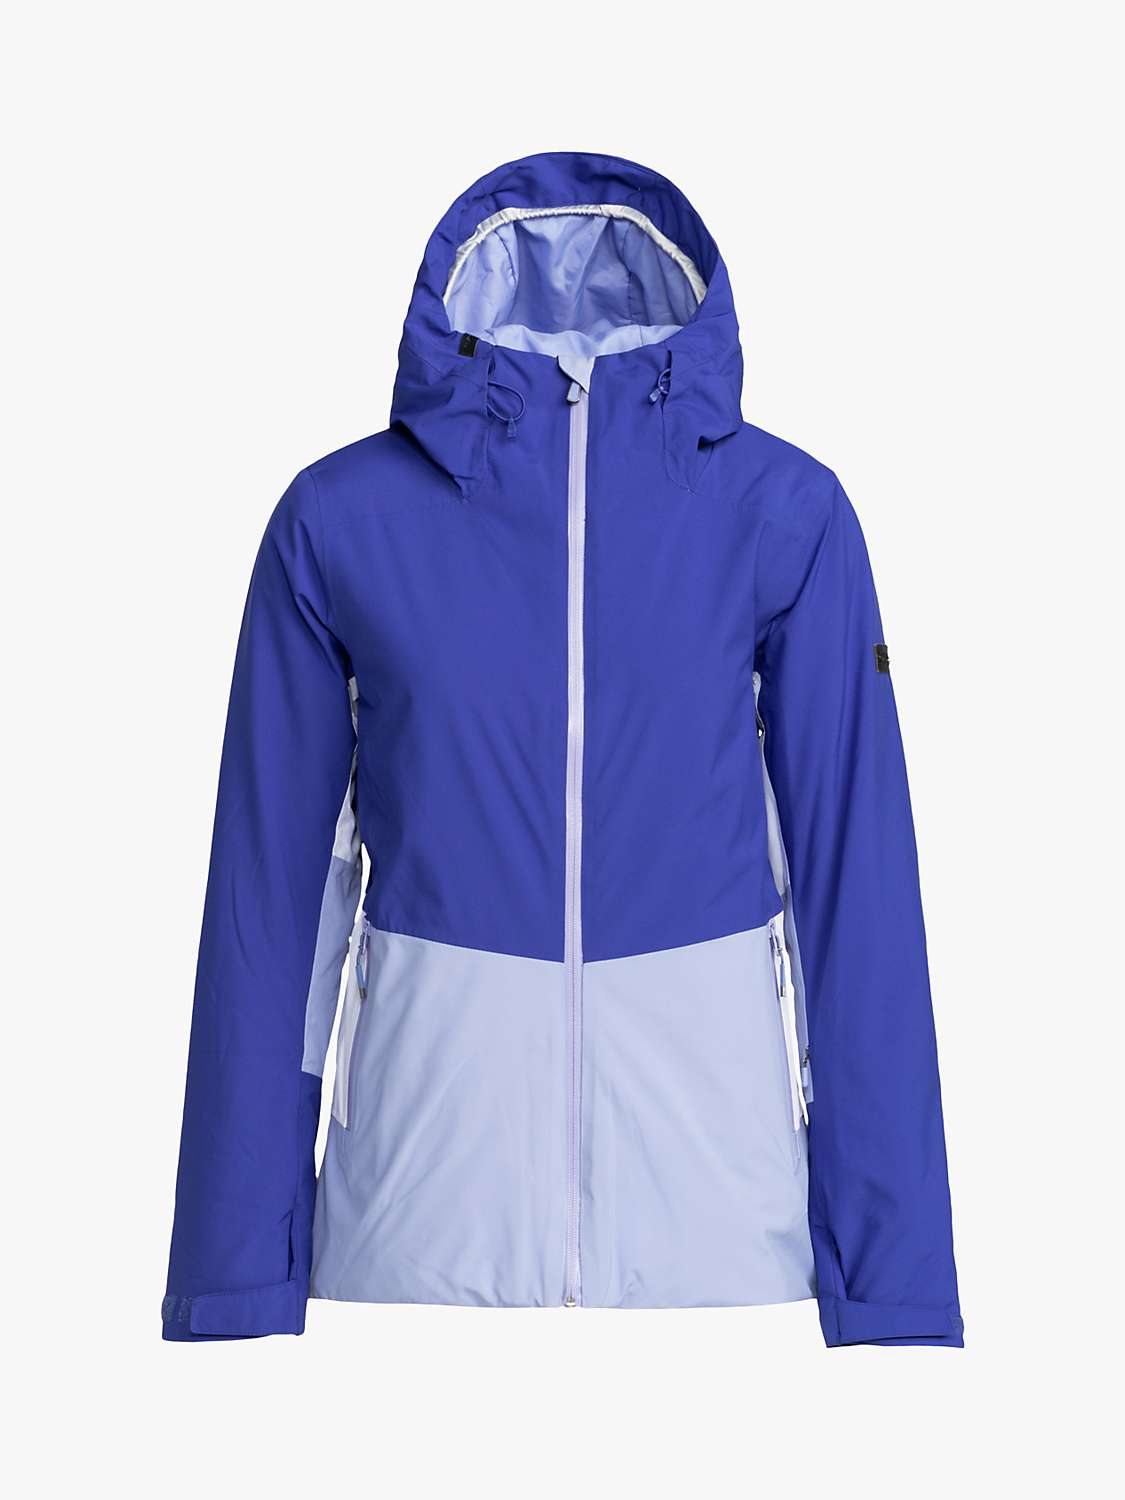 Buy Roxy Women's Peakside Technical Snow Jacket, Bluing Online at johnlewis.com